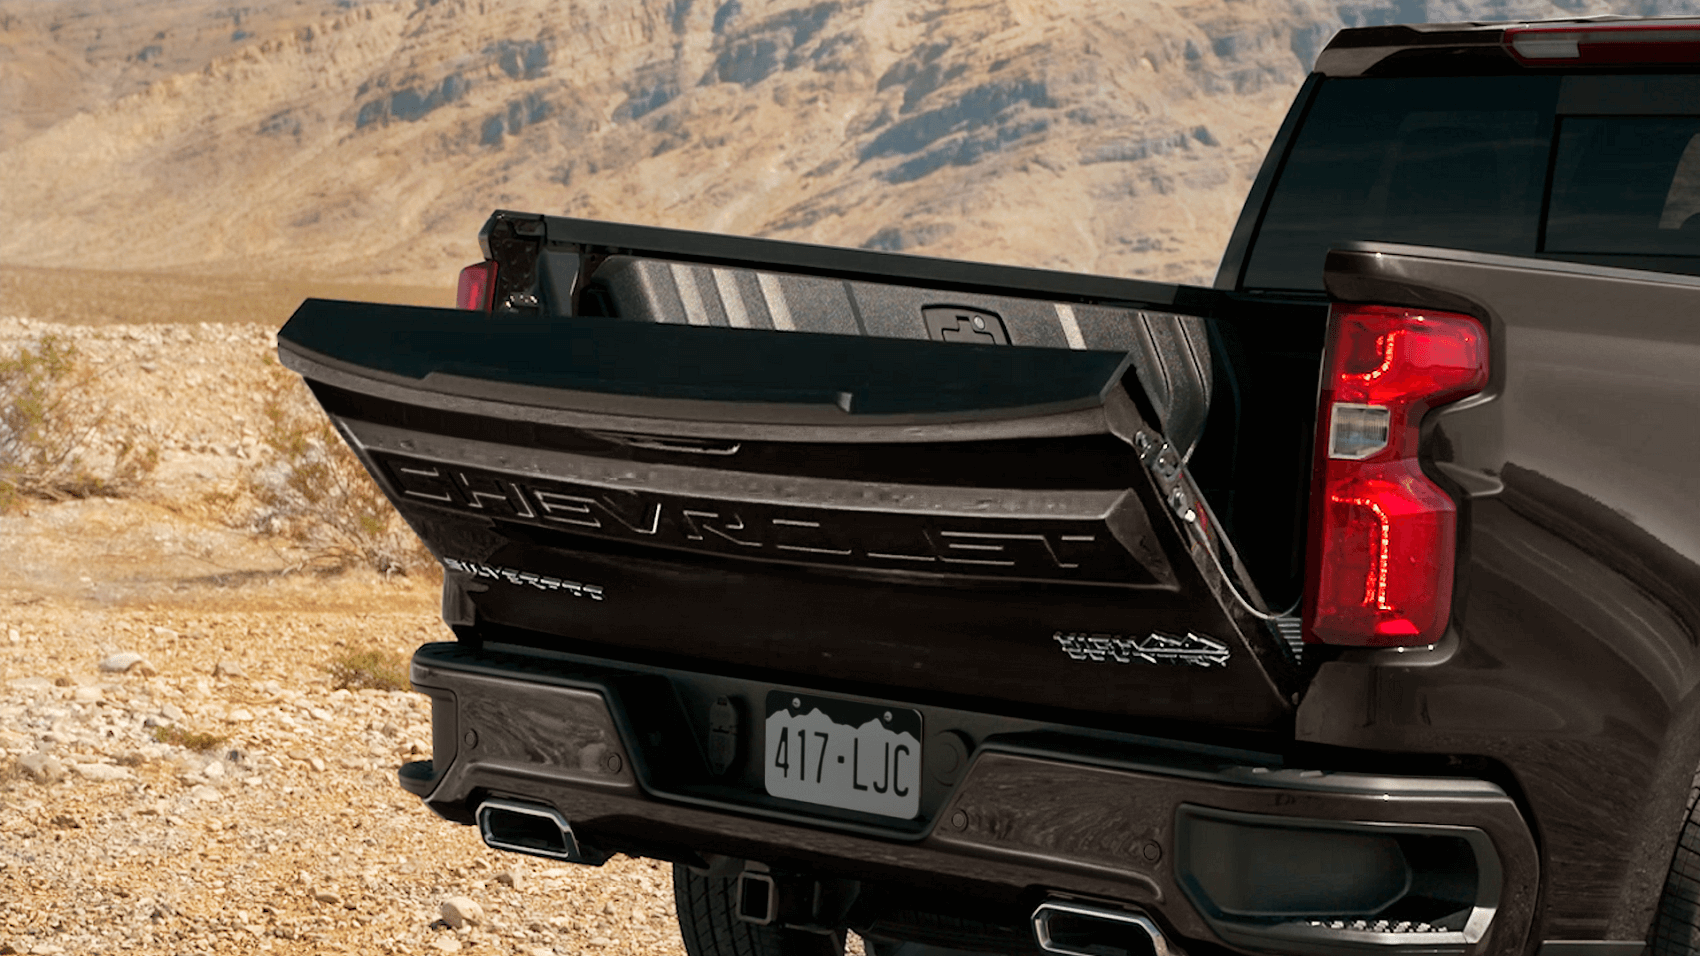 Black Chevy Silverado 1500 vs Ford F-150 truck bed